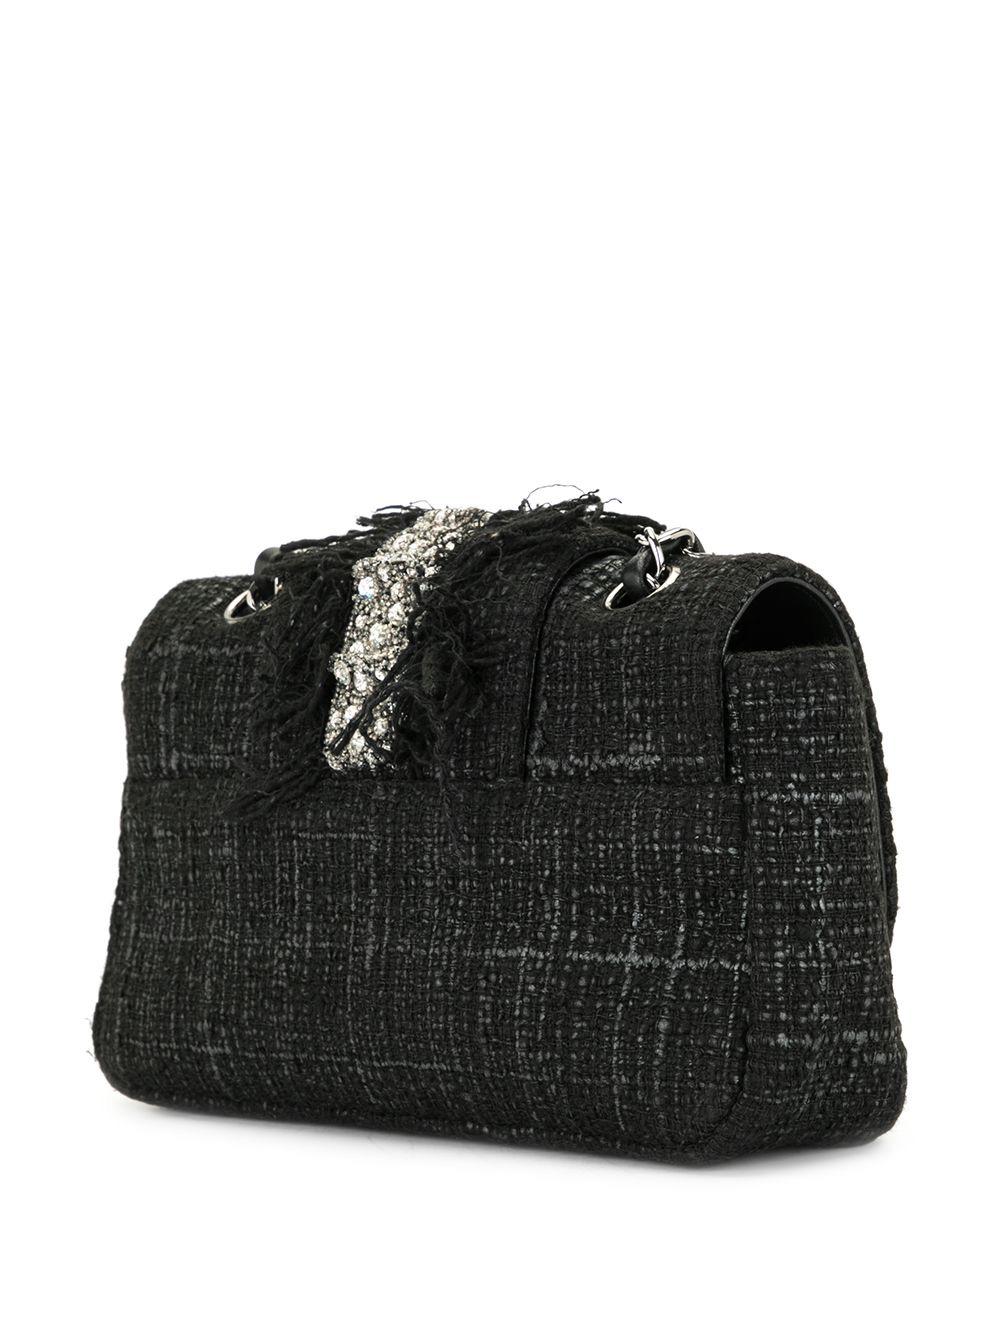 Black Chanel 2006 Vintage Rare Small Tweed Swarovski Strass Fringe Classic Flap Bag For Sale